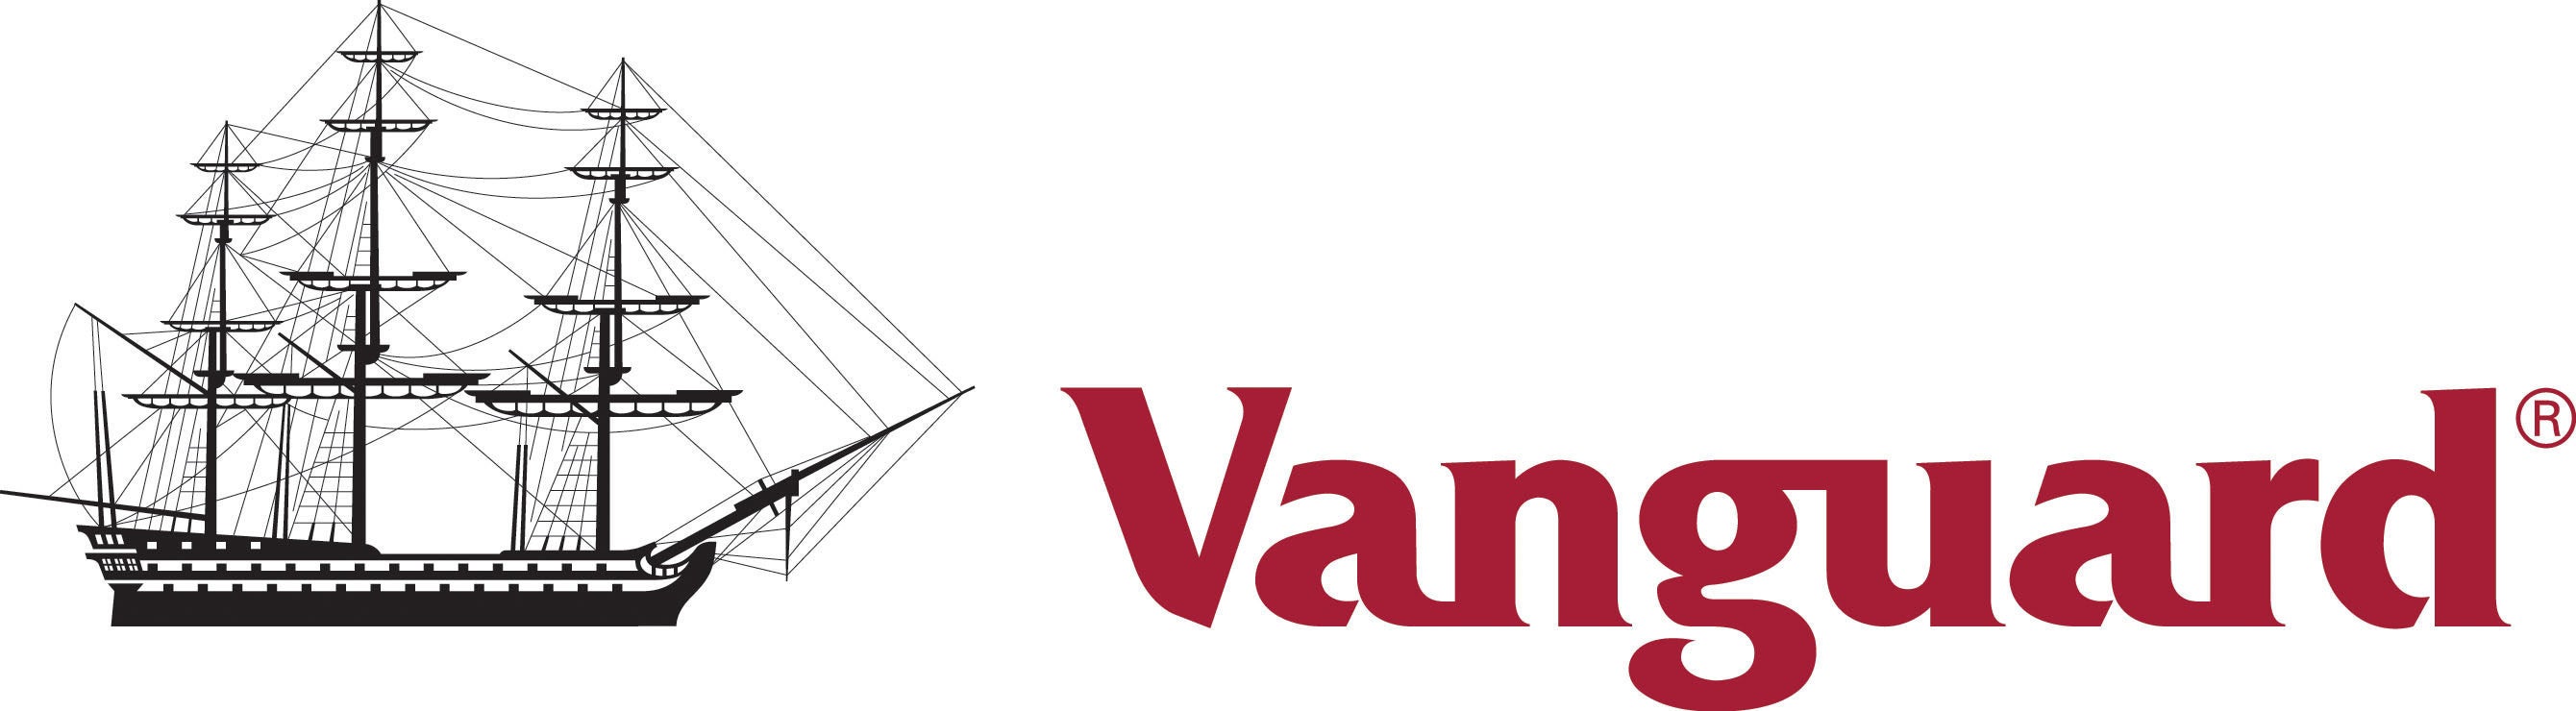 Vanguard Logo with sailing ship beside it